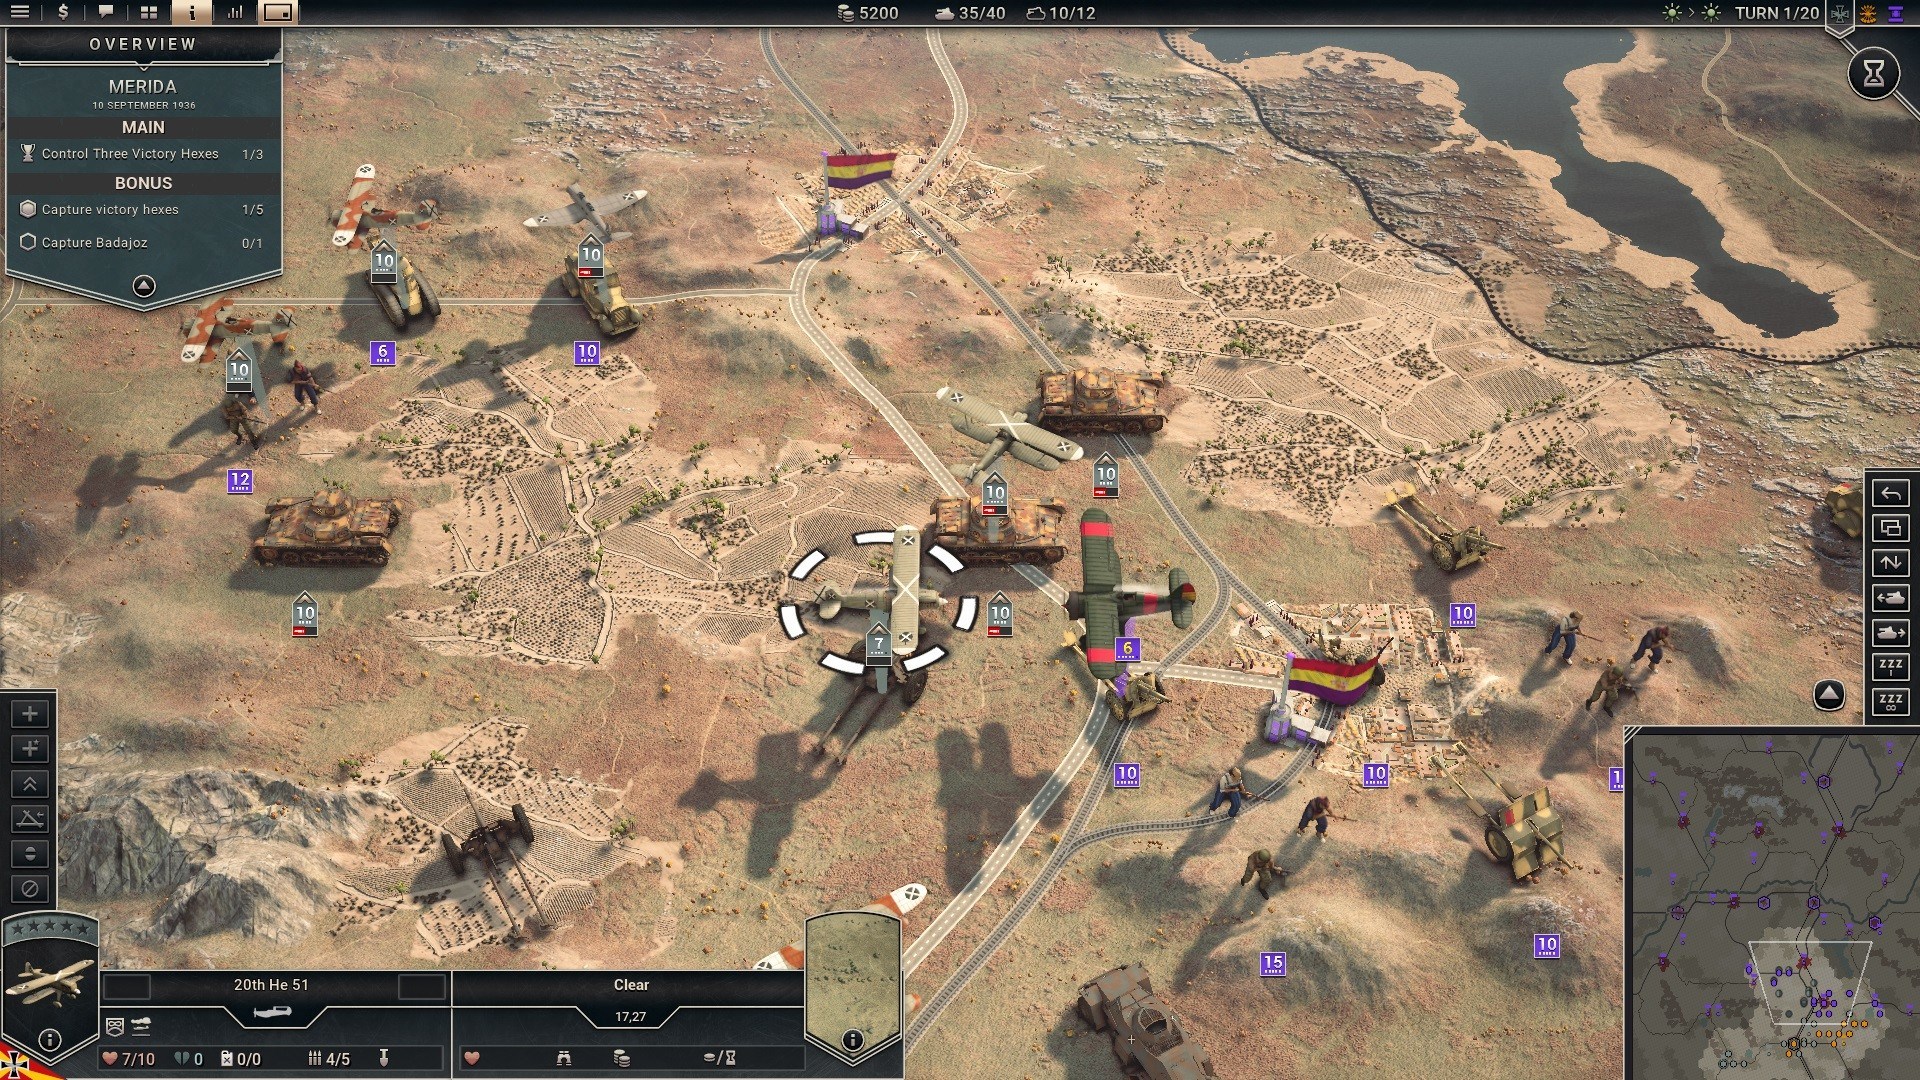 Panzer Corps 2: Axis Operations - Spanish Civil War screenshot 50914